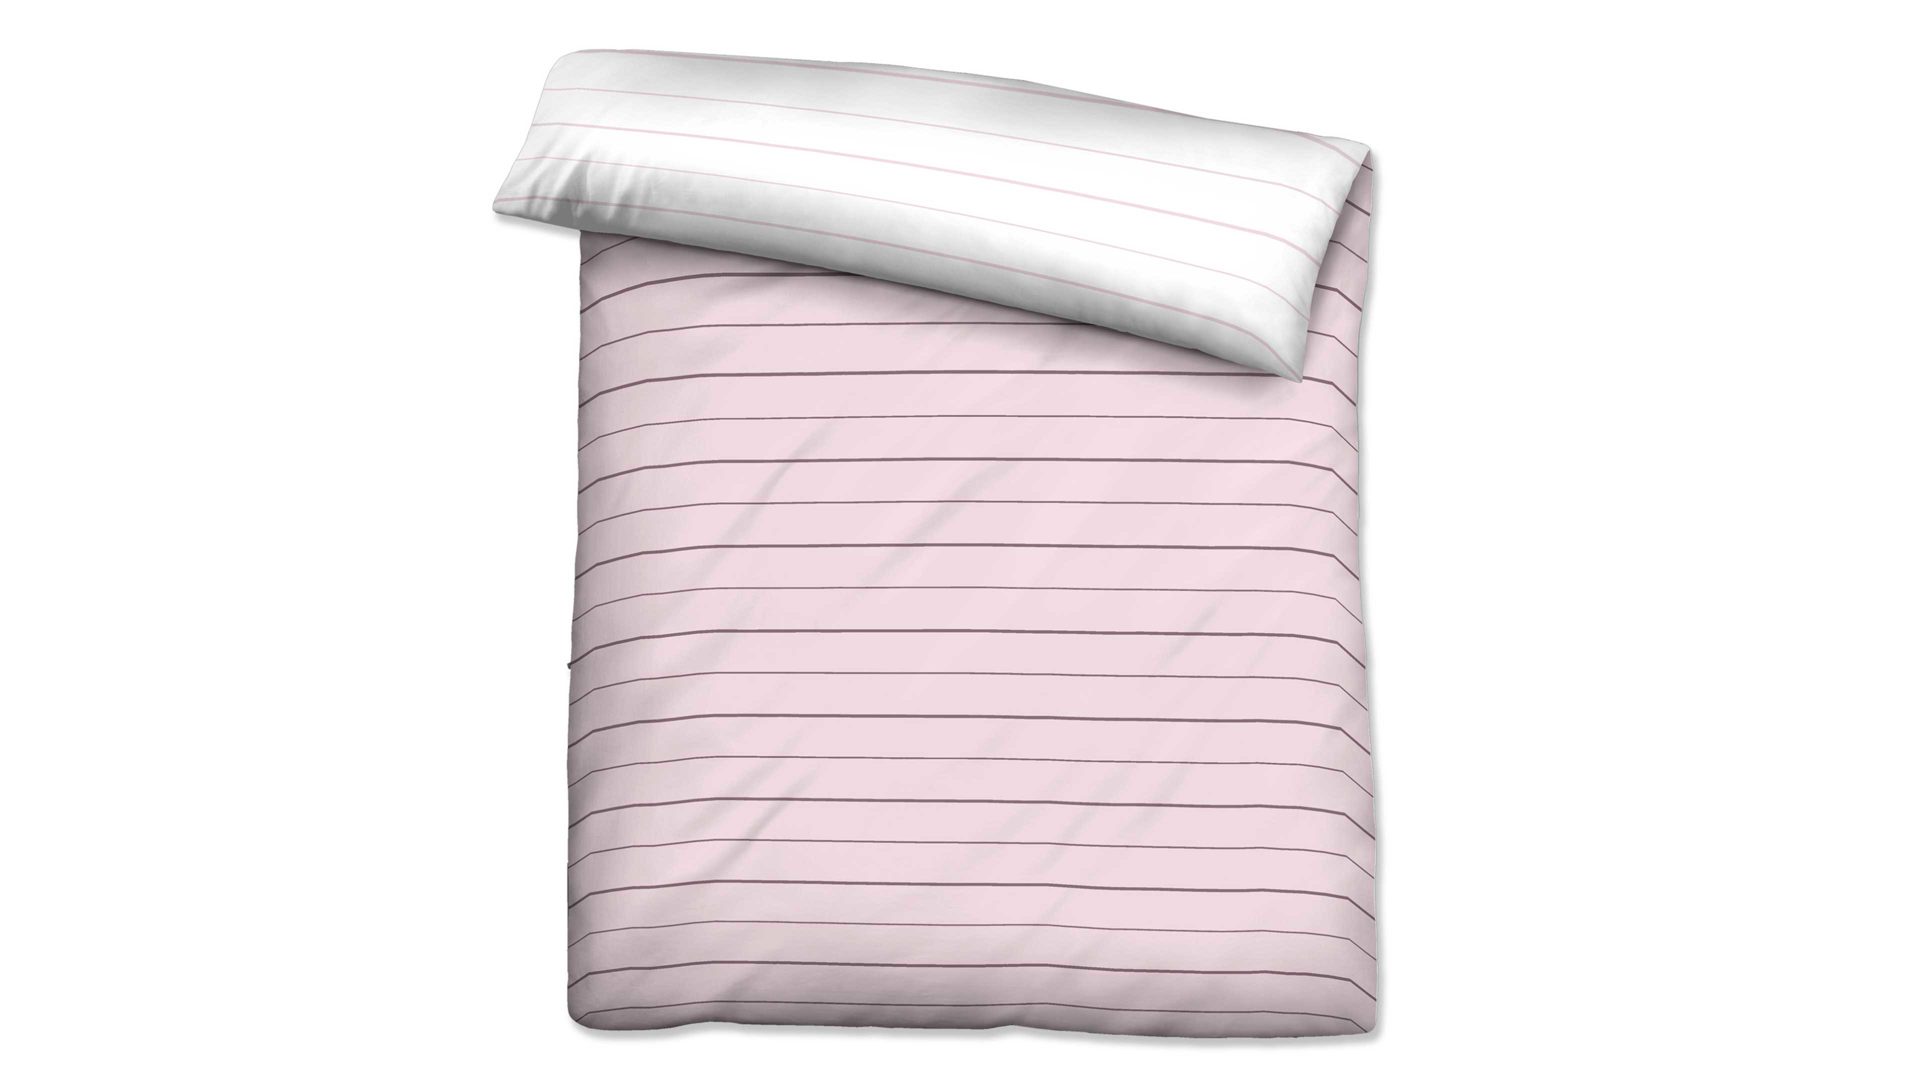 Bettbezug Biberna aus Stoff in Pastellfarben biberna Mako-Satin Bettdeckenbezug Streifen Mix & Match rosefarbene & sturmgraue Streifen – ca. 155 x 220 cm